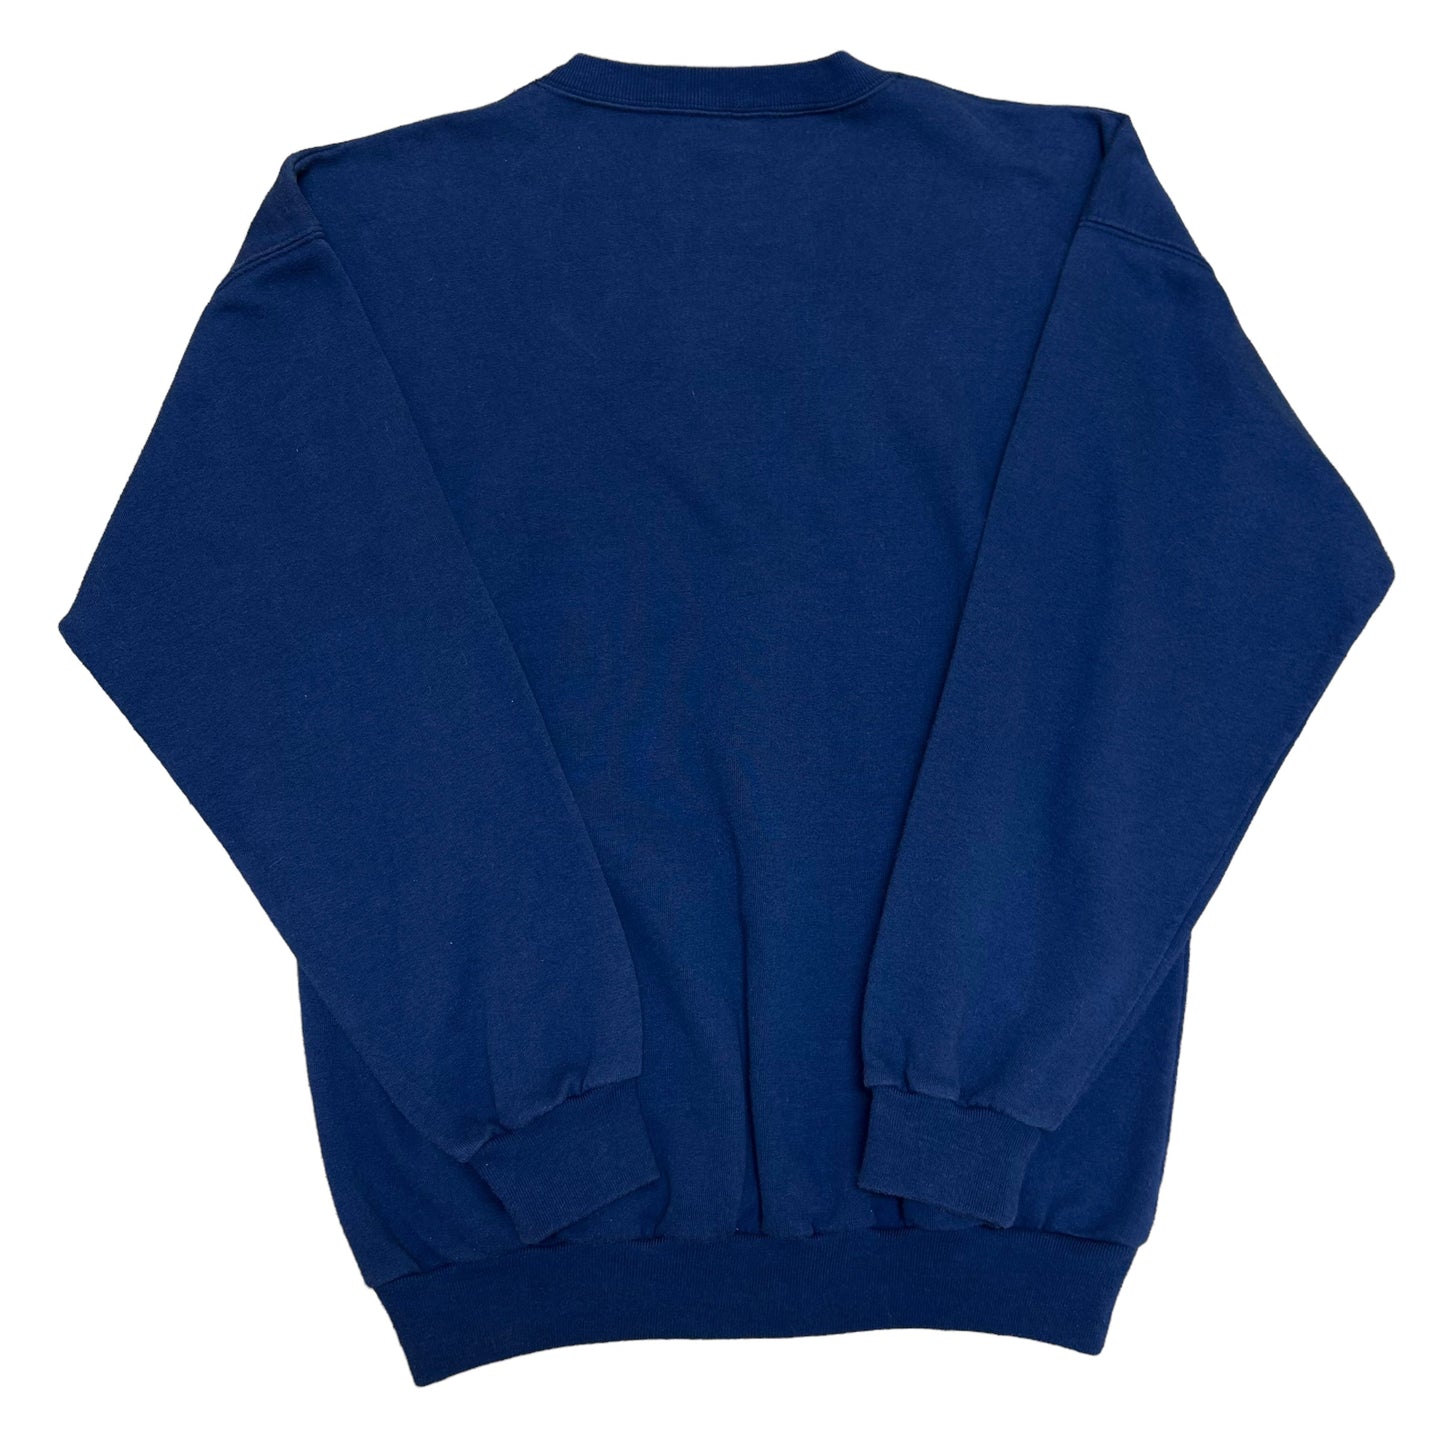 Vintage 1990s København (Copenhagen) Denmark Navy Blue Crewneck Sweatshirt - Size Large (Fits Medium)